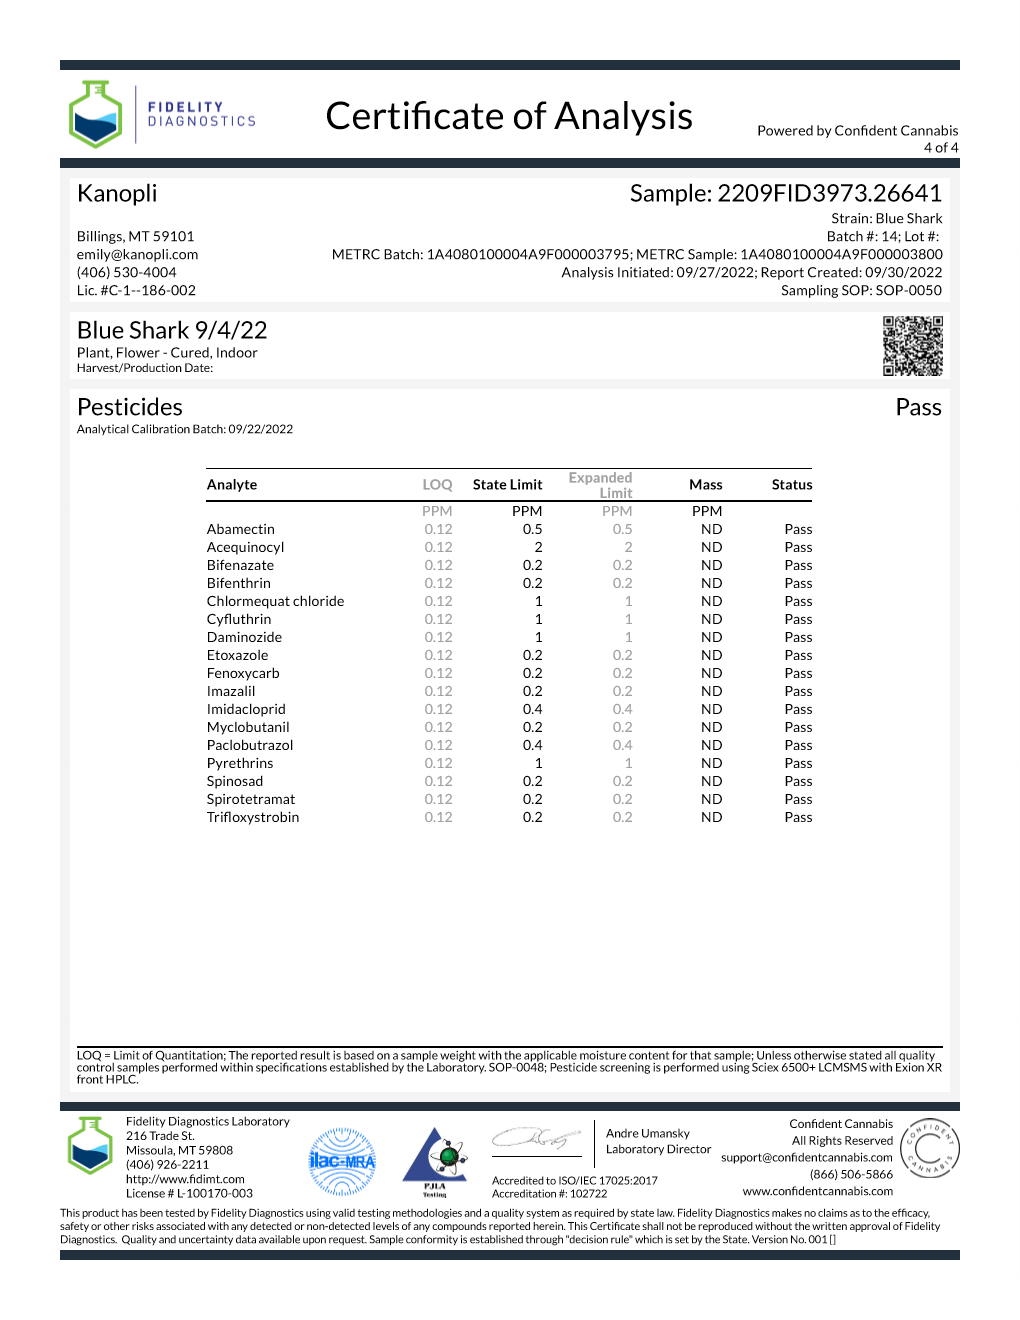 Blue Shark - Hybrid high CBD 9% CBD (Sept. 2022) shorties (1 gram)